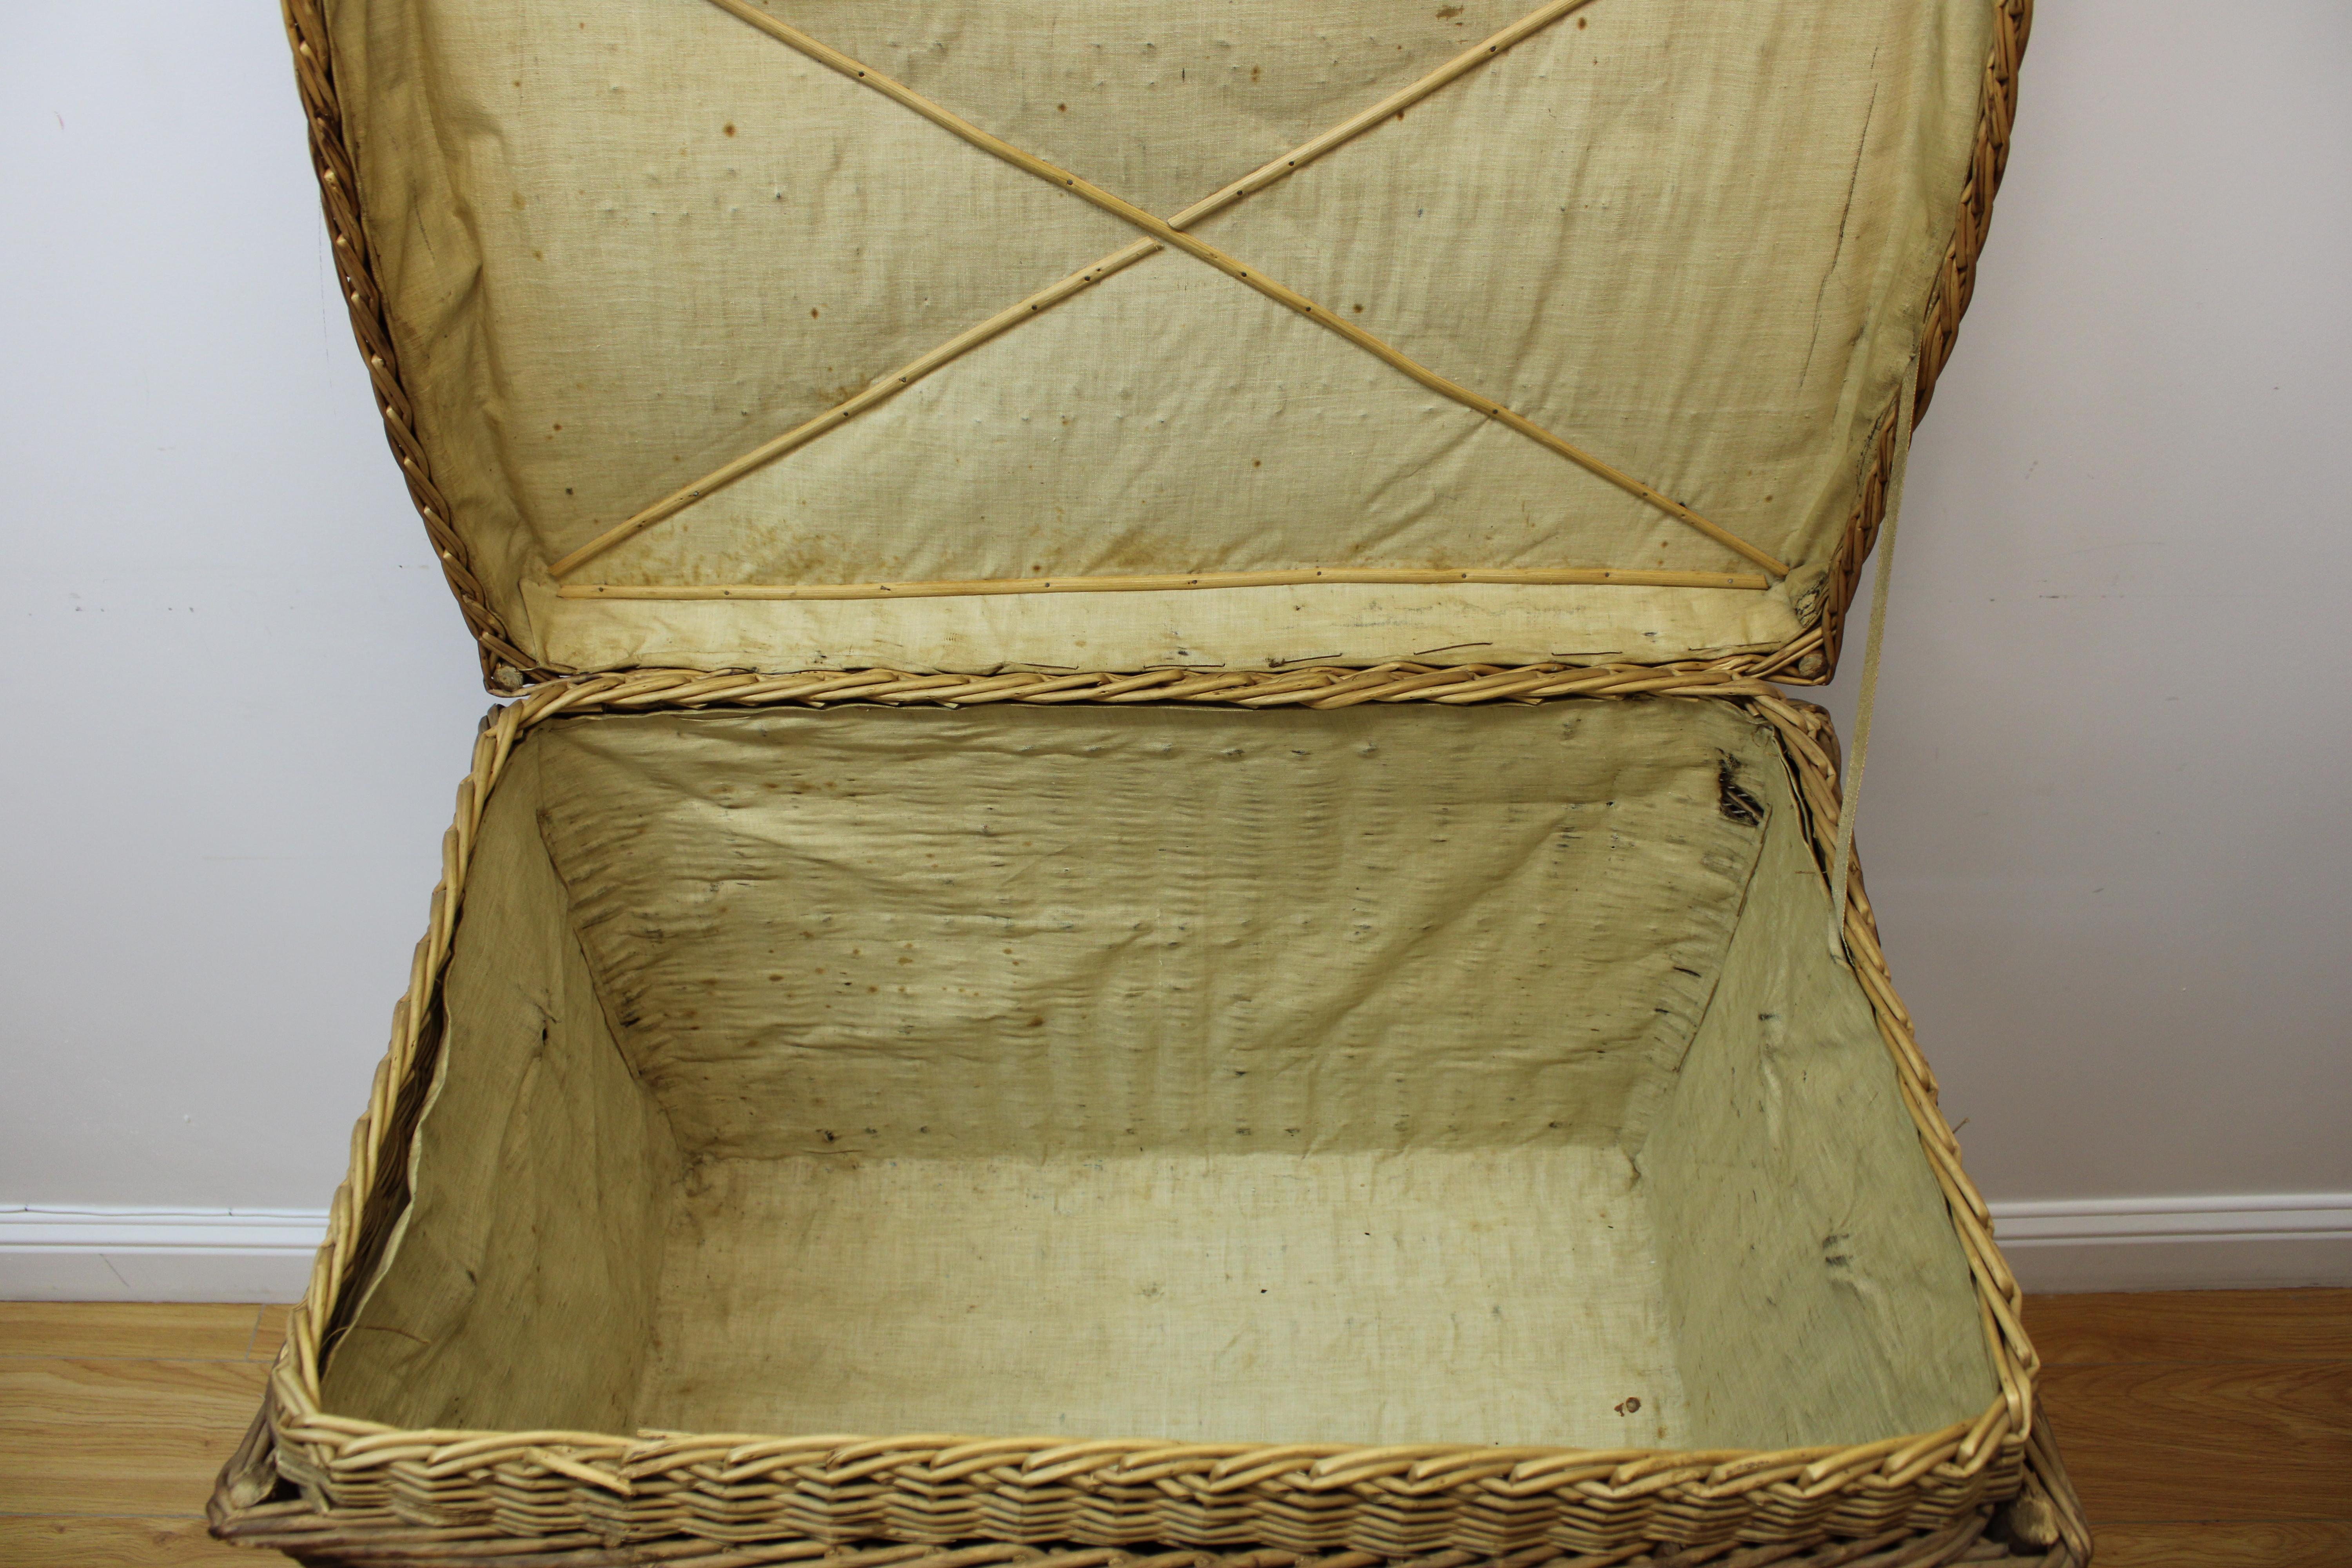 Fabric Woven Traveling Basket / Picnic Basket